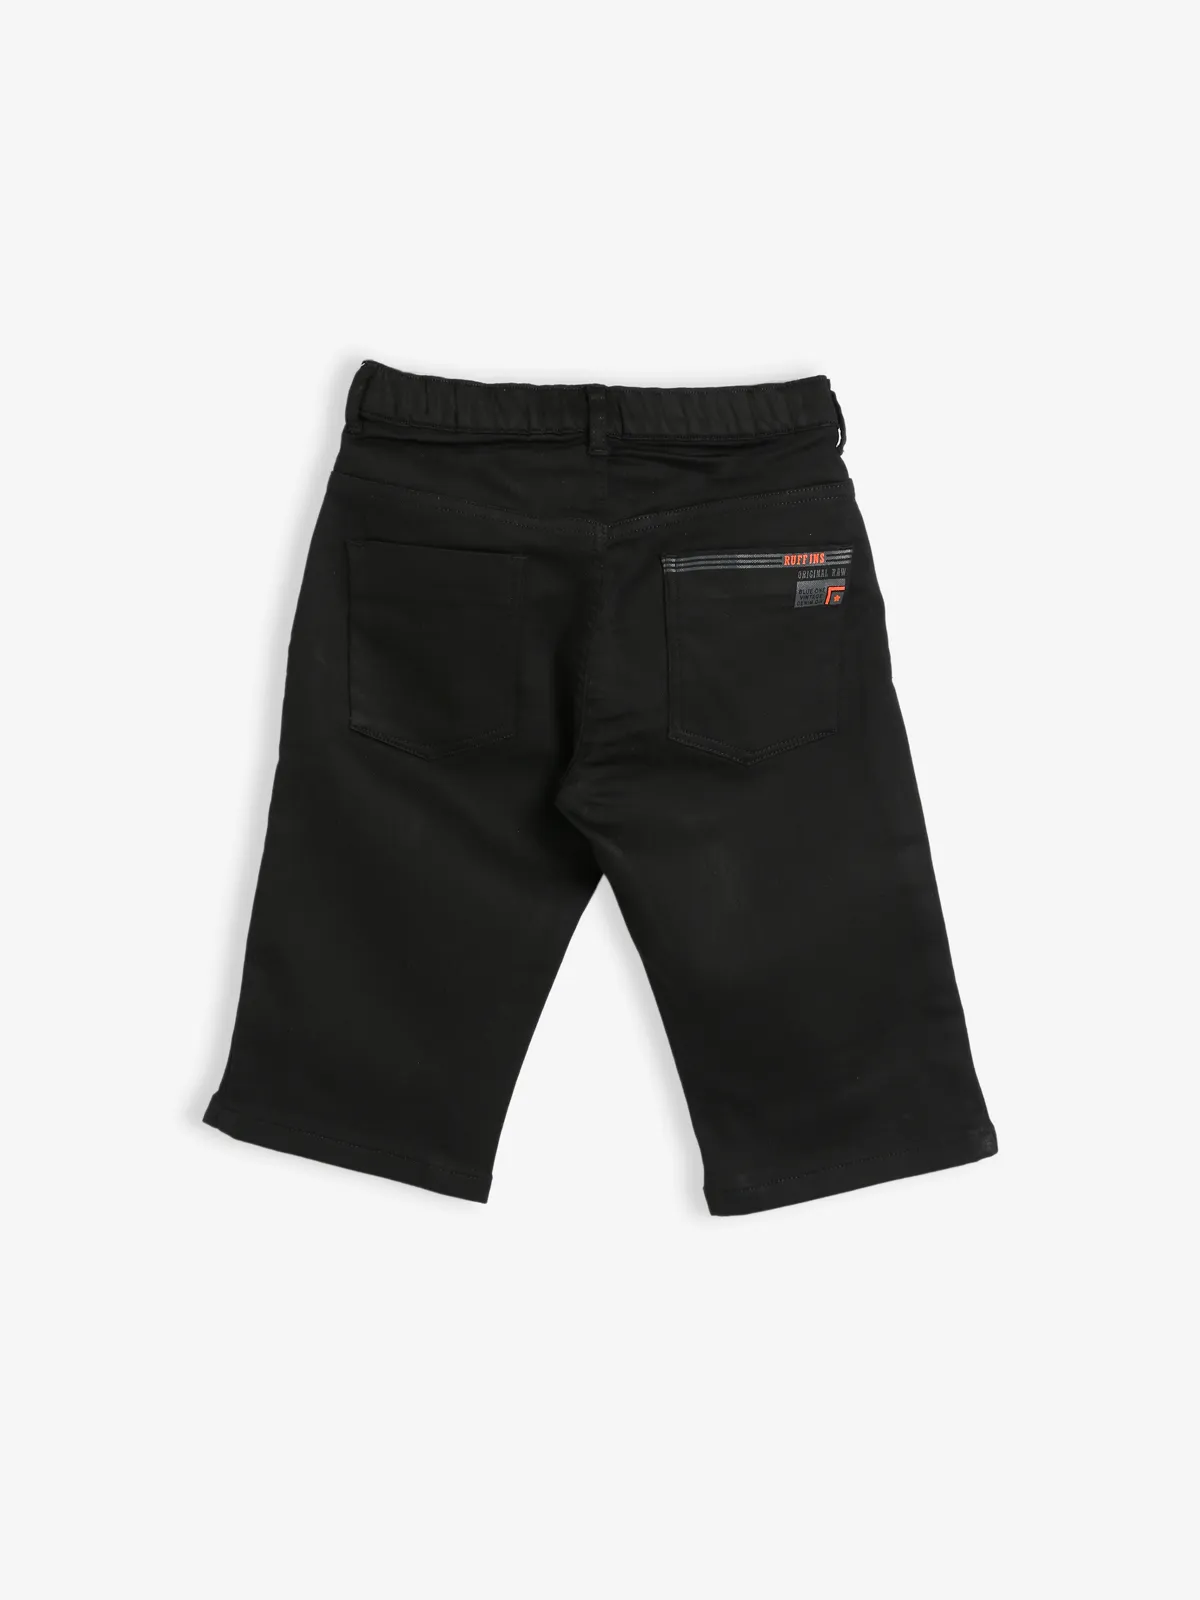 Ruff black denim shorts